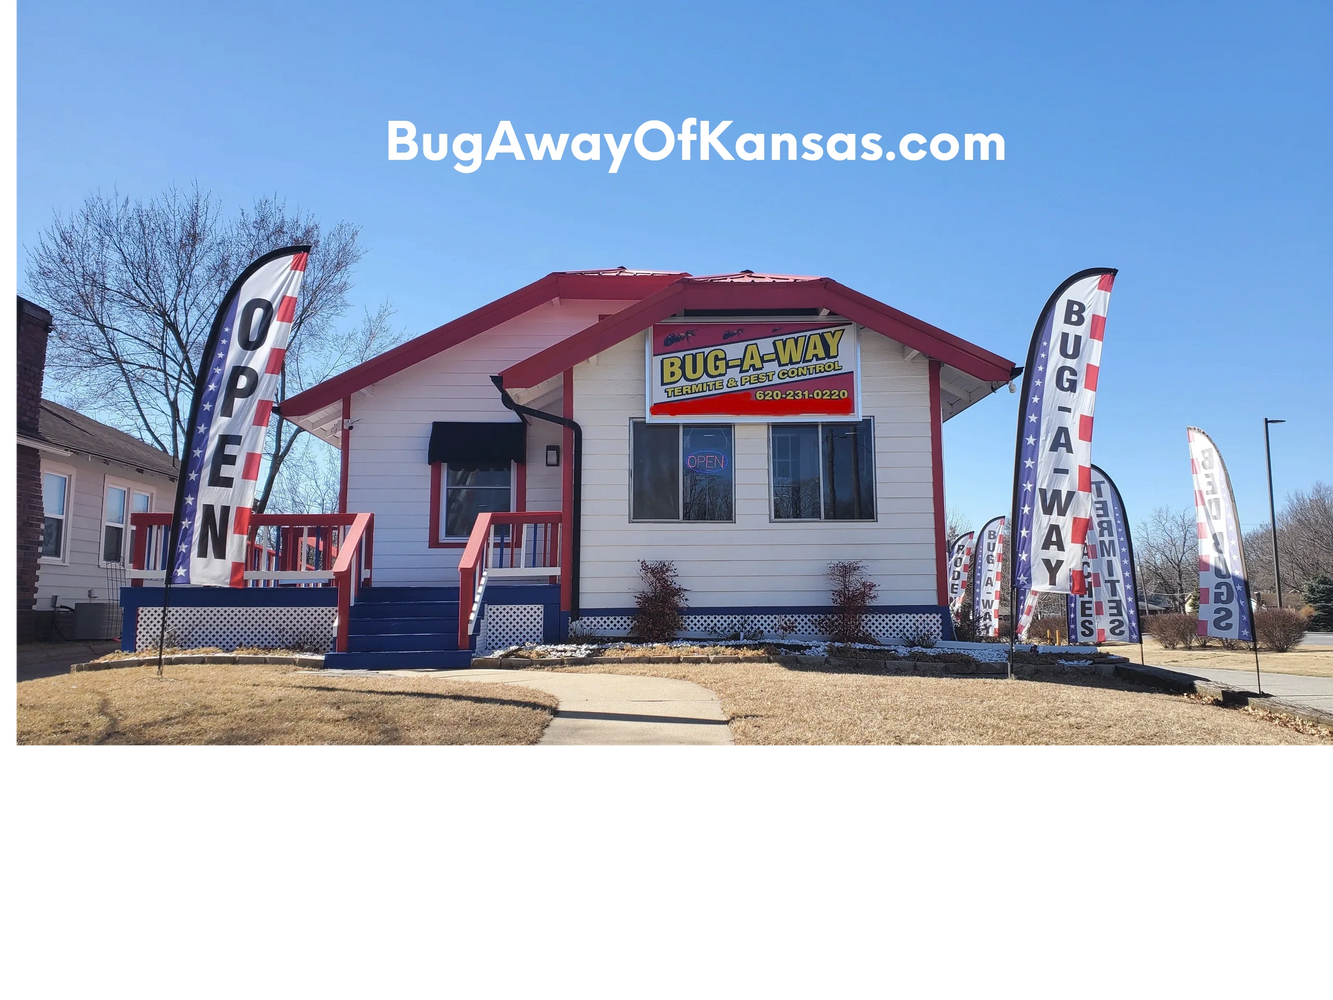 BugAwayOfKansas services Southeast and all of Kansas: Pittsburg, Parsons, Fort Scott, 